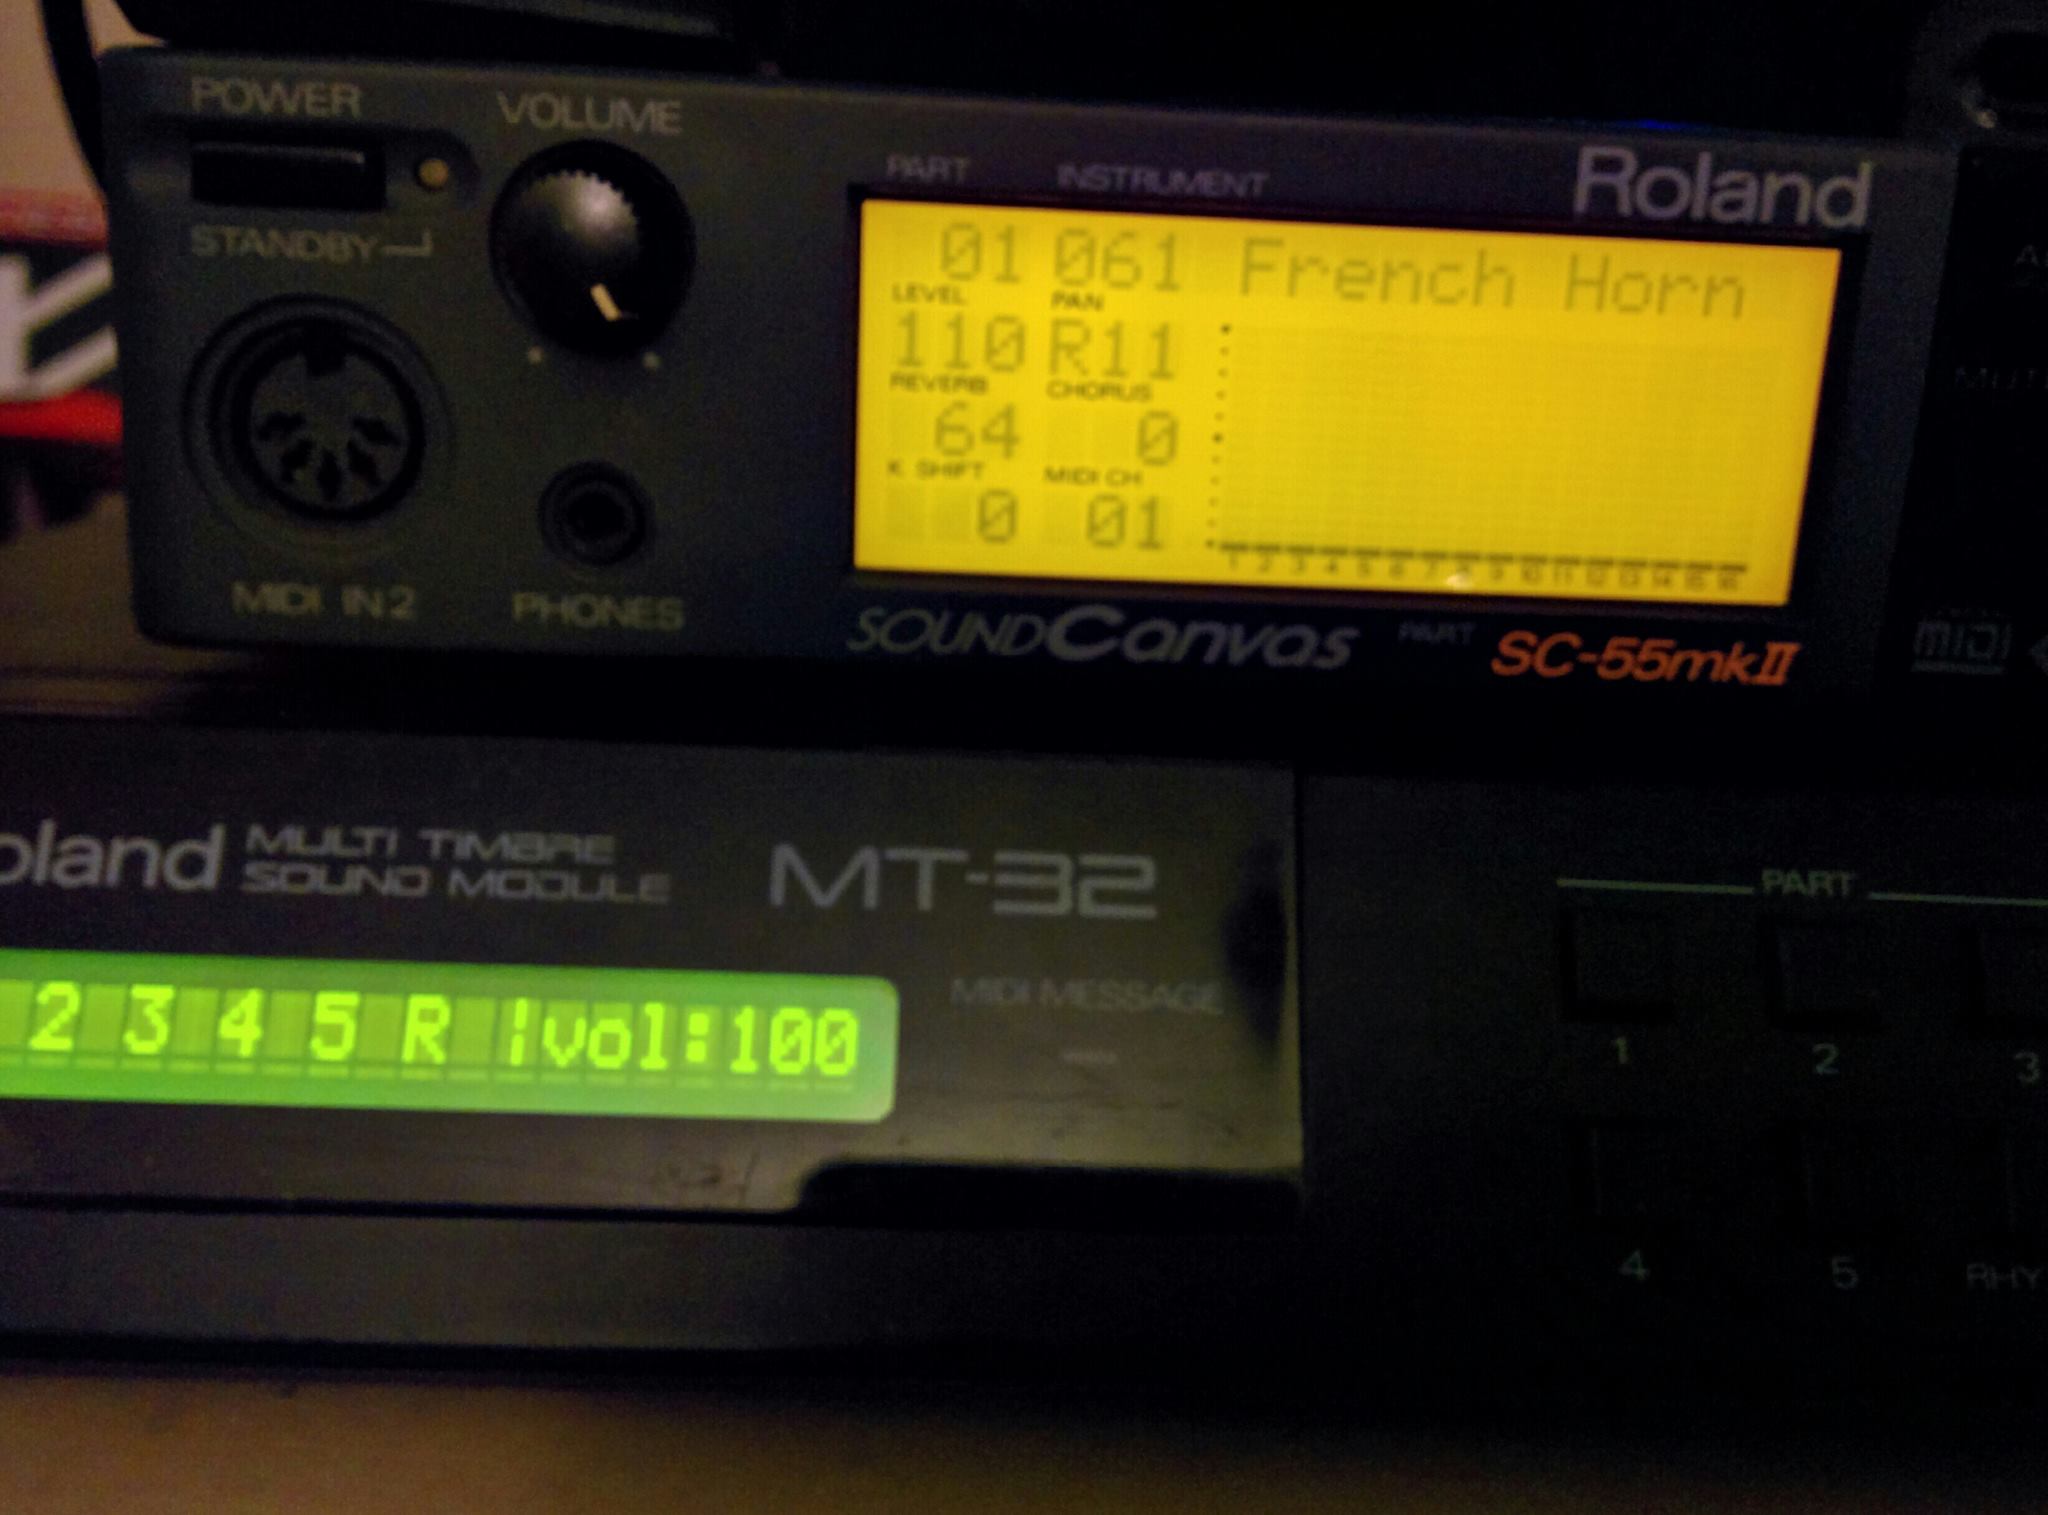 The Hard Stuff: The Roland MT-32 and SC-55mkII MIDI Modules